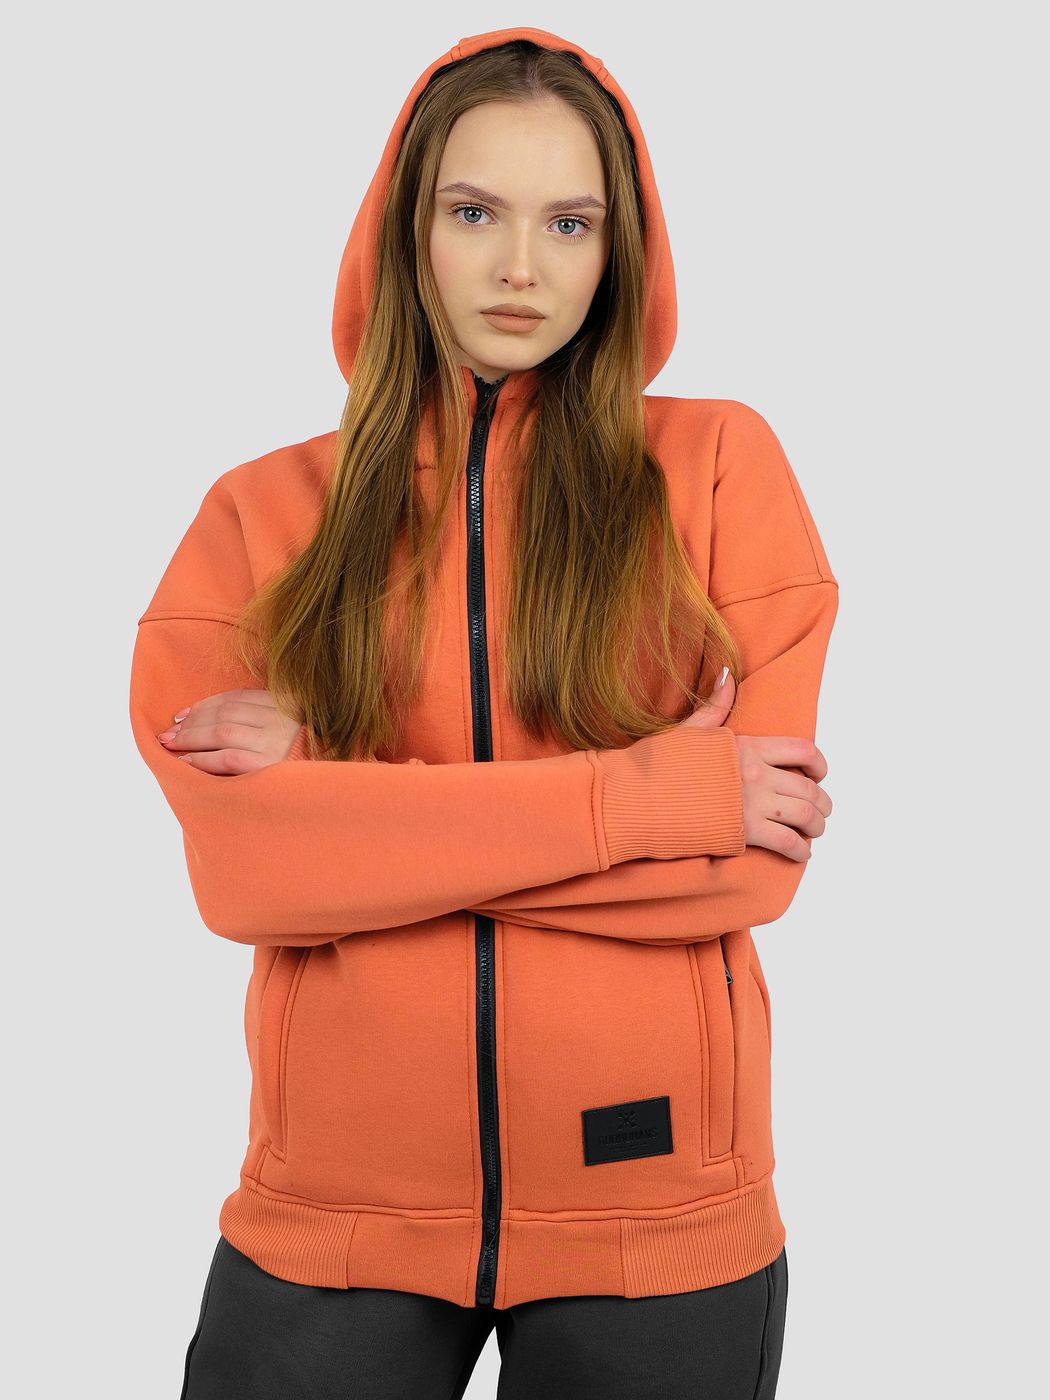 Women's Hoodie brick orange Hoodie with Zipper, Brick orange, XS-S